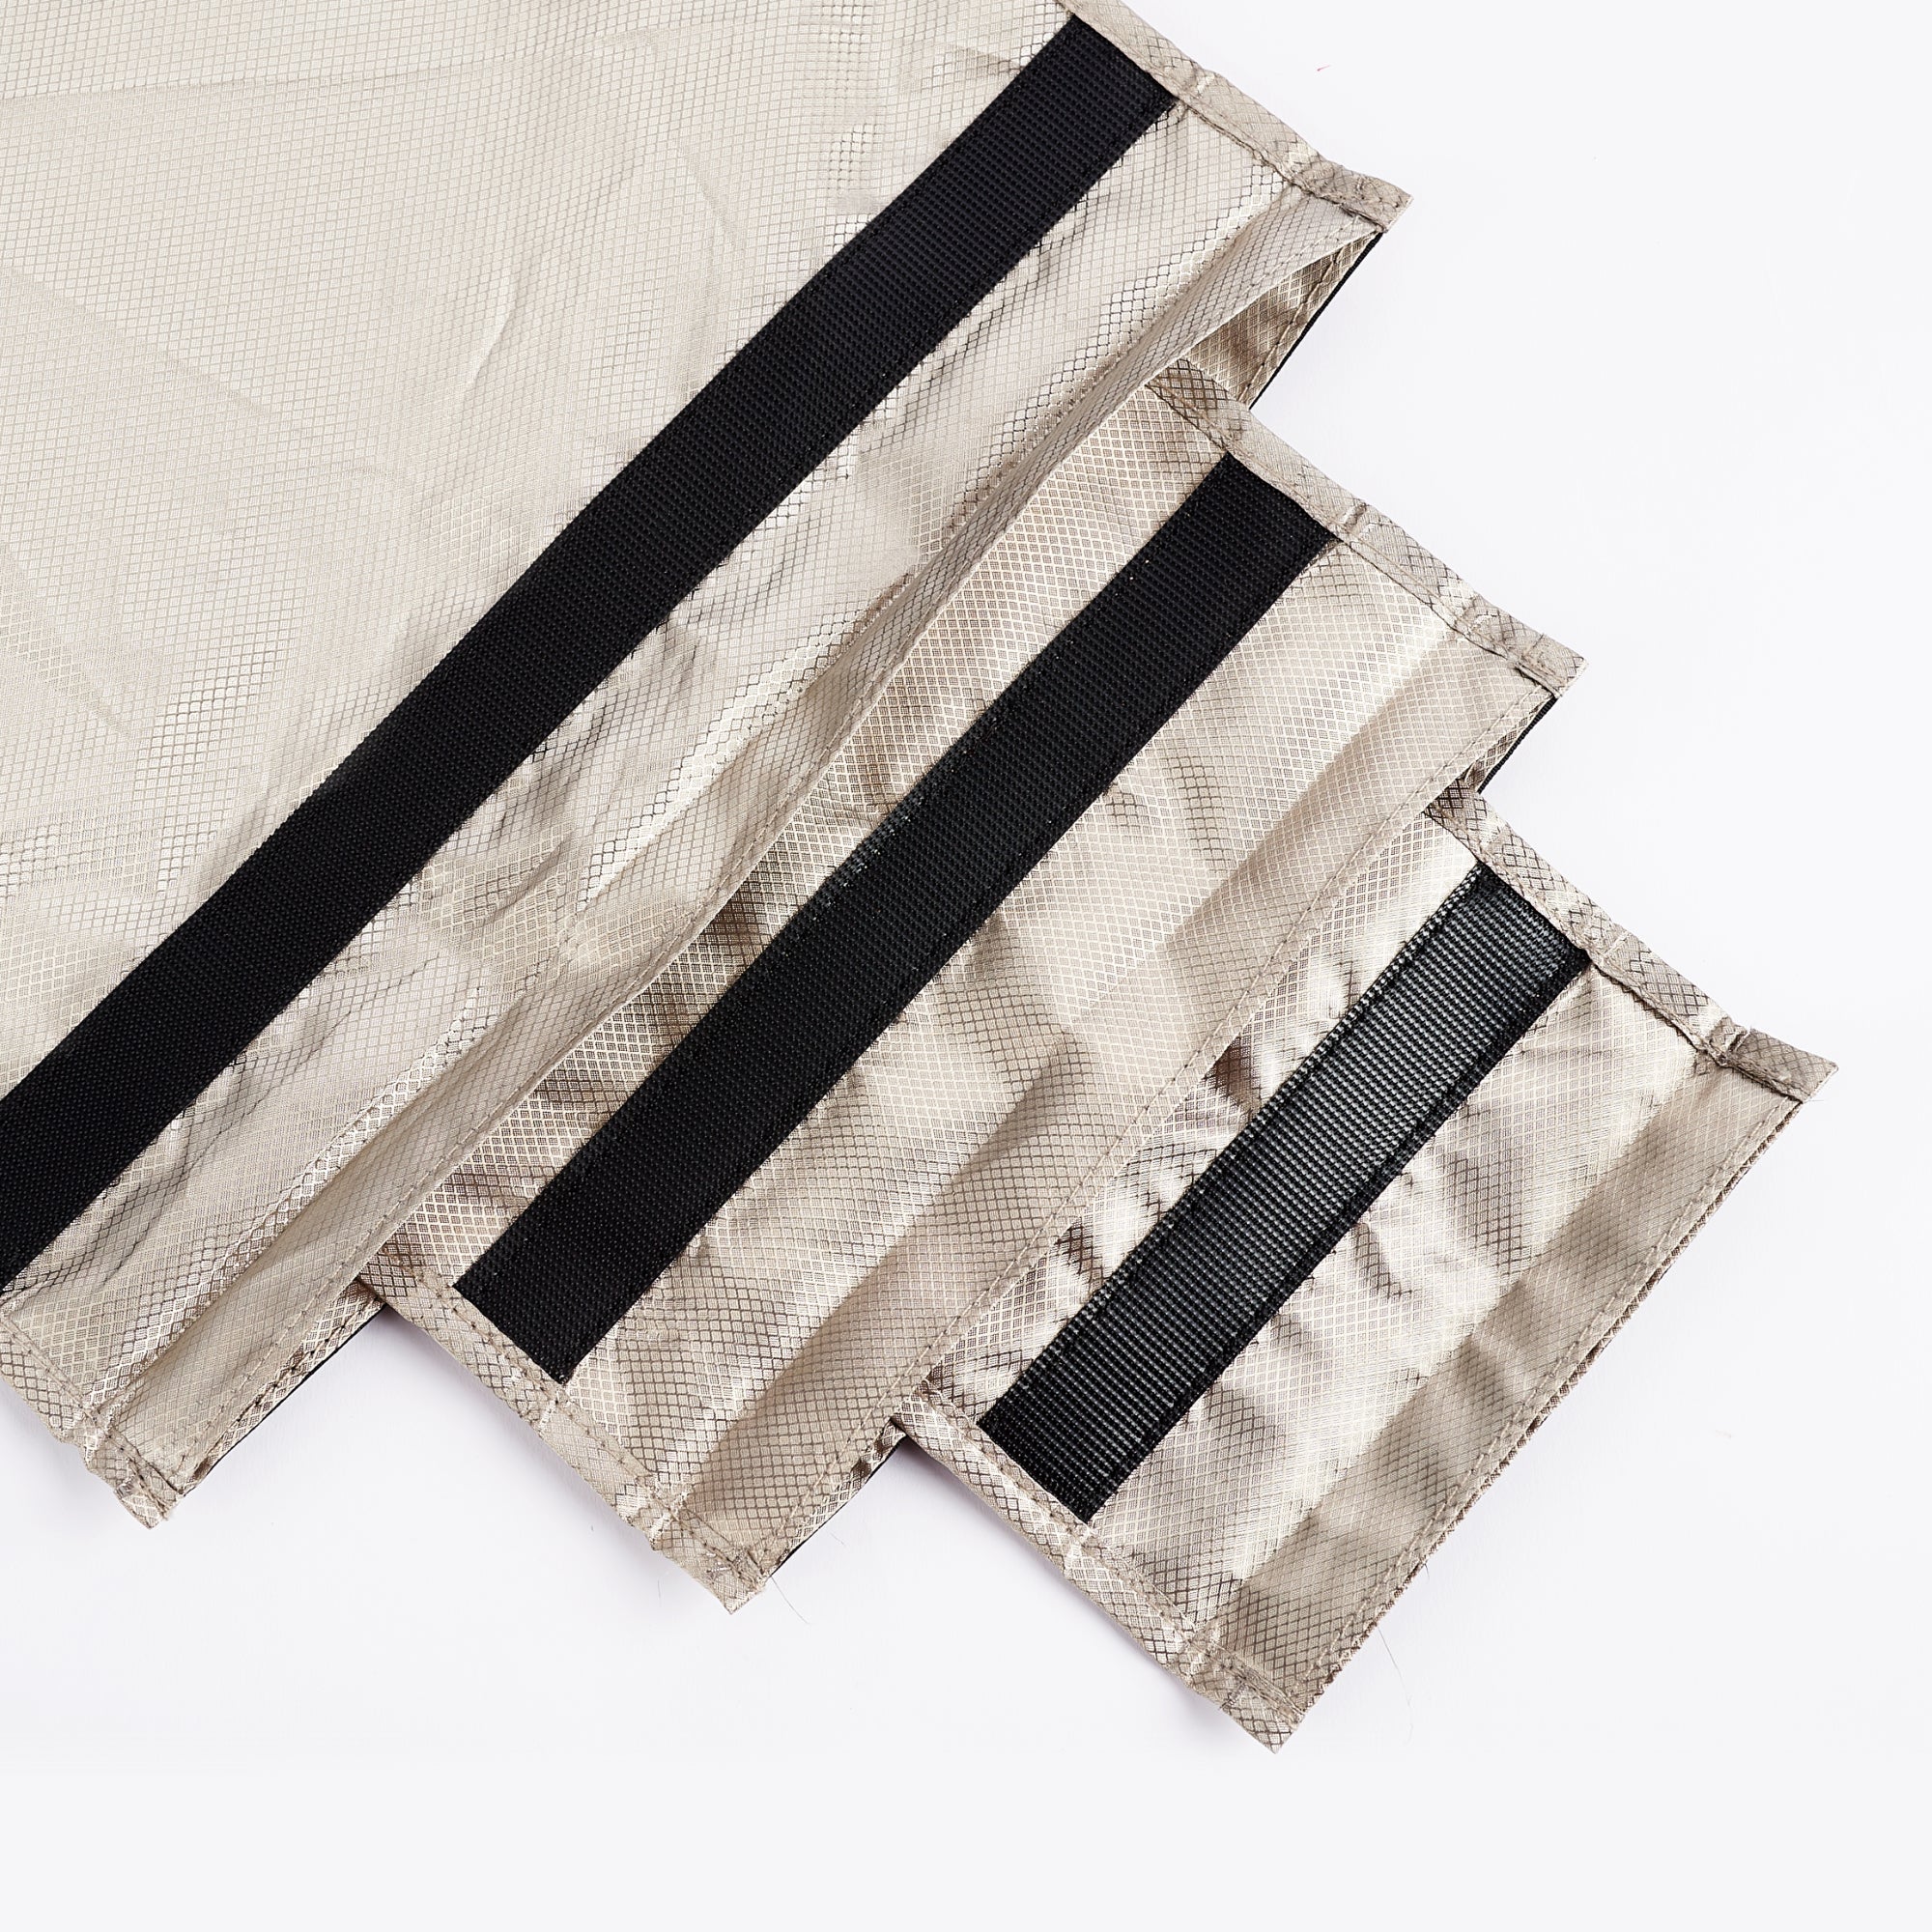 10pc Mega Kit NX3 Double Layer CYBER Fabric Faraday Bag - Faraday